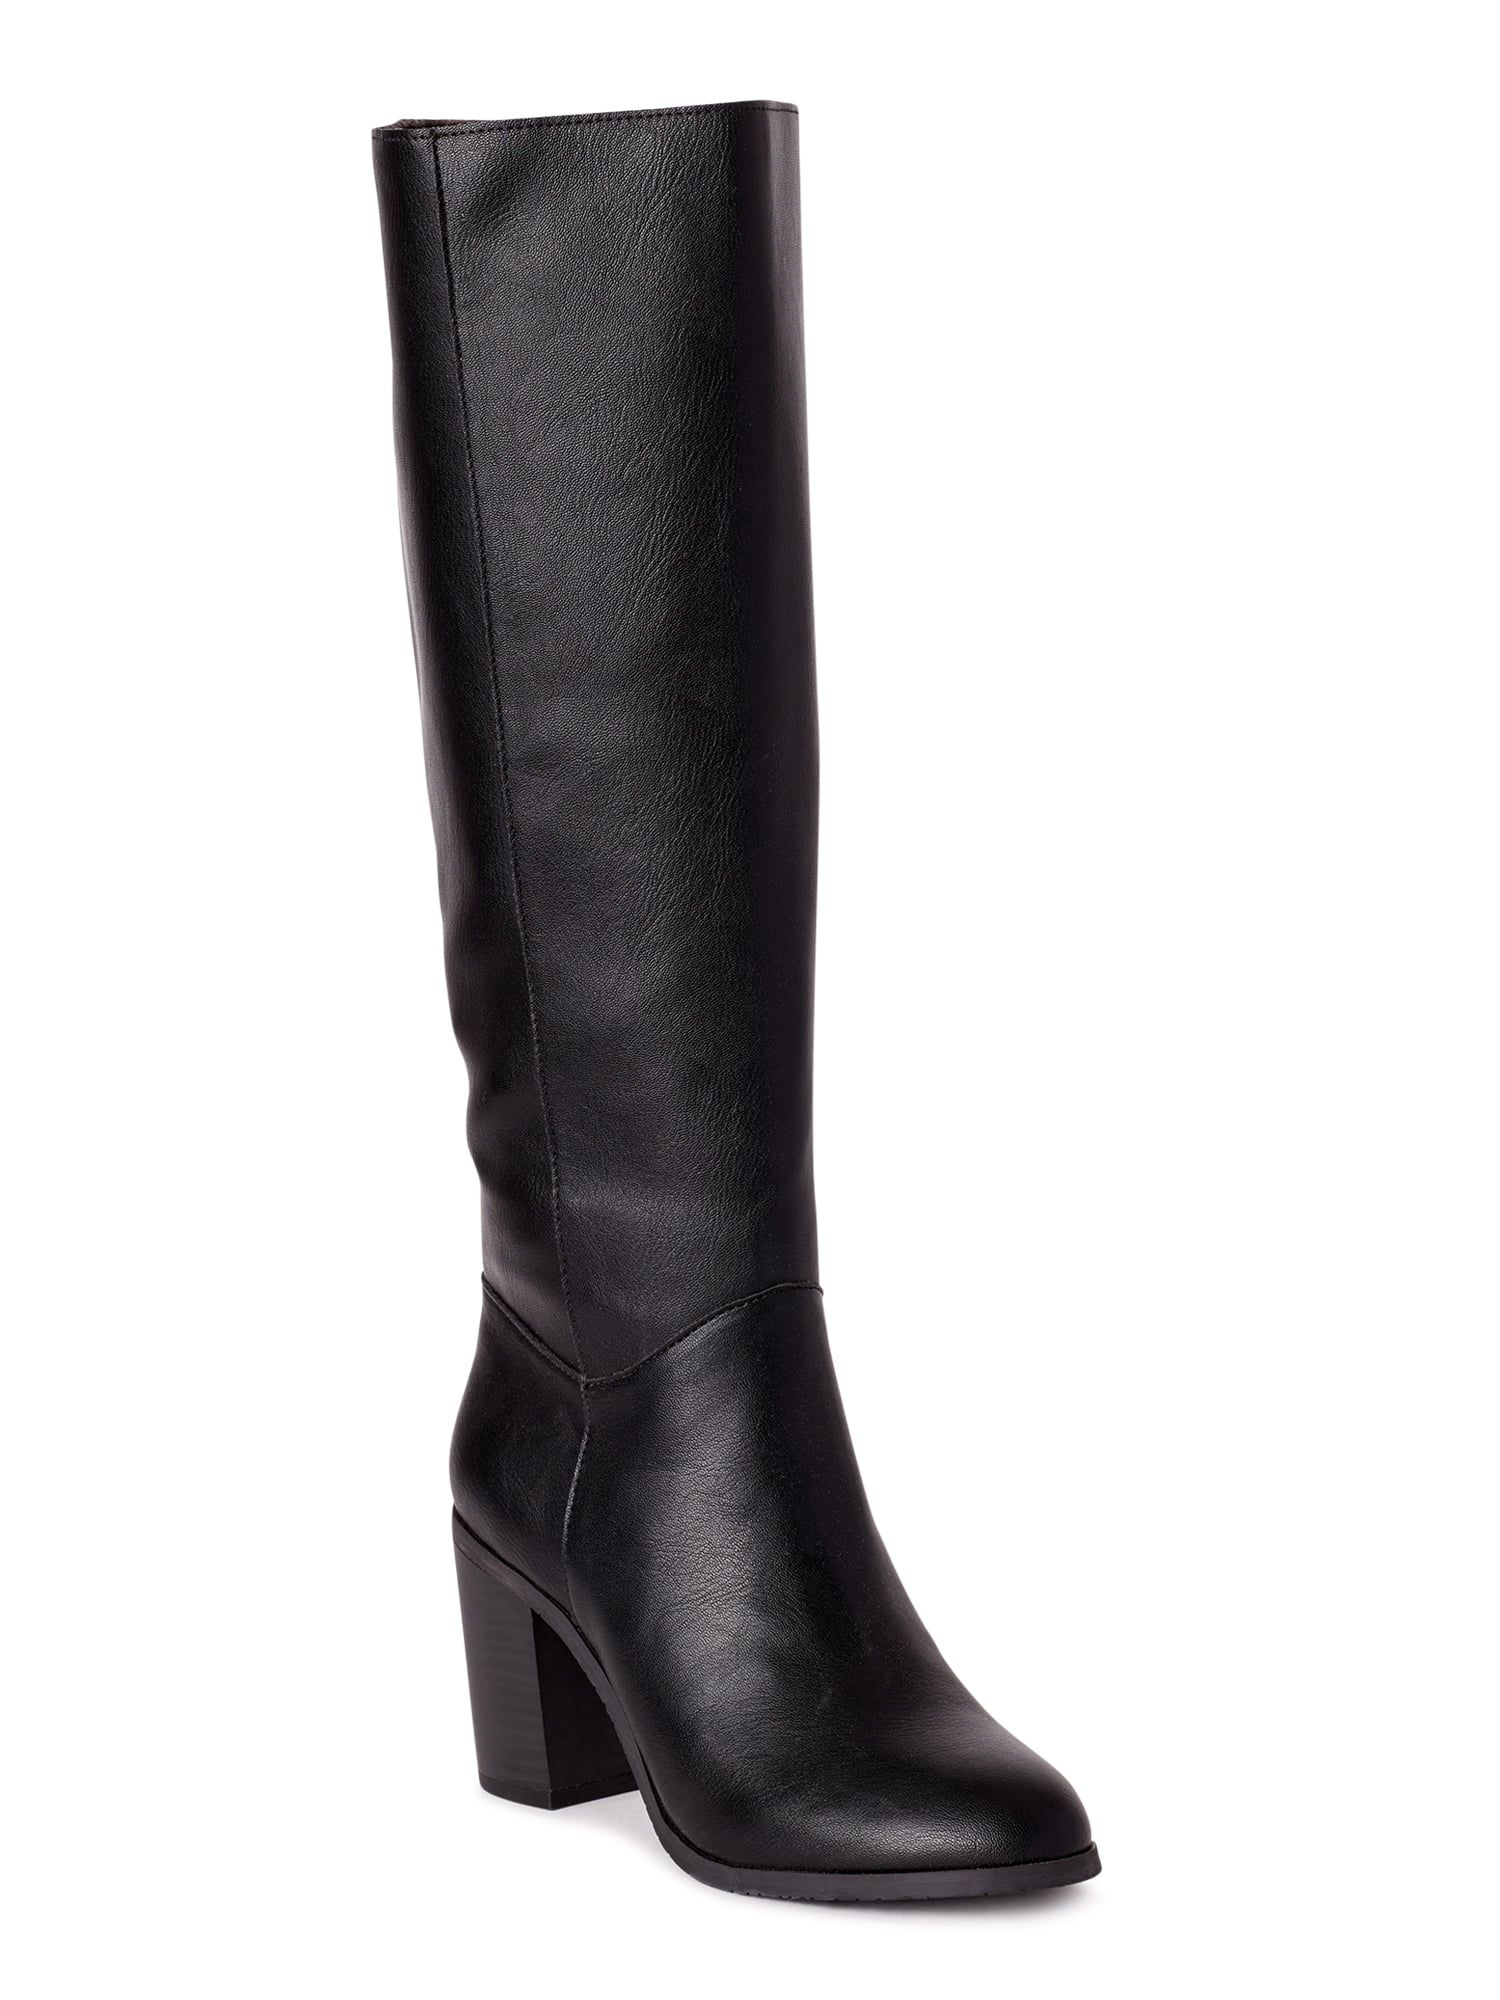 Melrose Ave Women's Vegan Leather Knee High Block Heel Boots | Walmart (US)